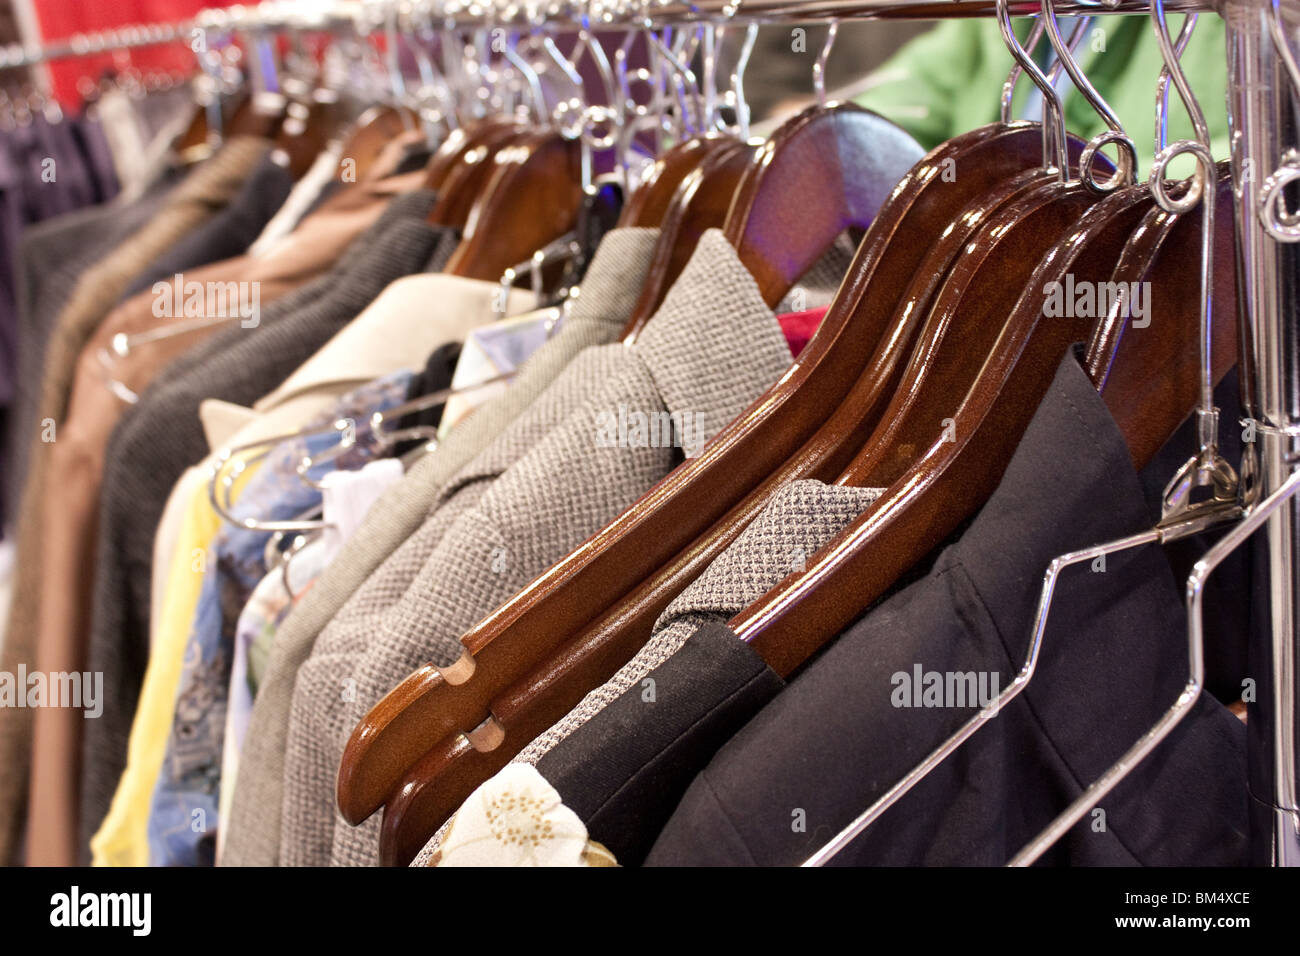 messy clothing rack Stock Photo